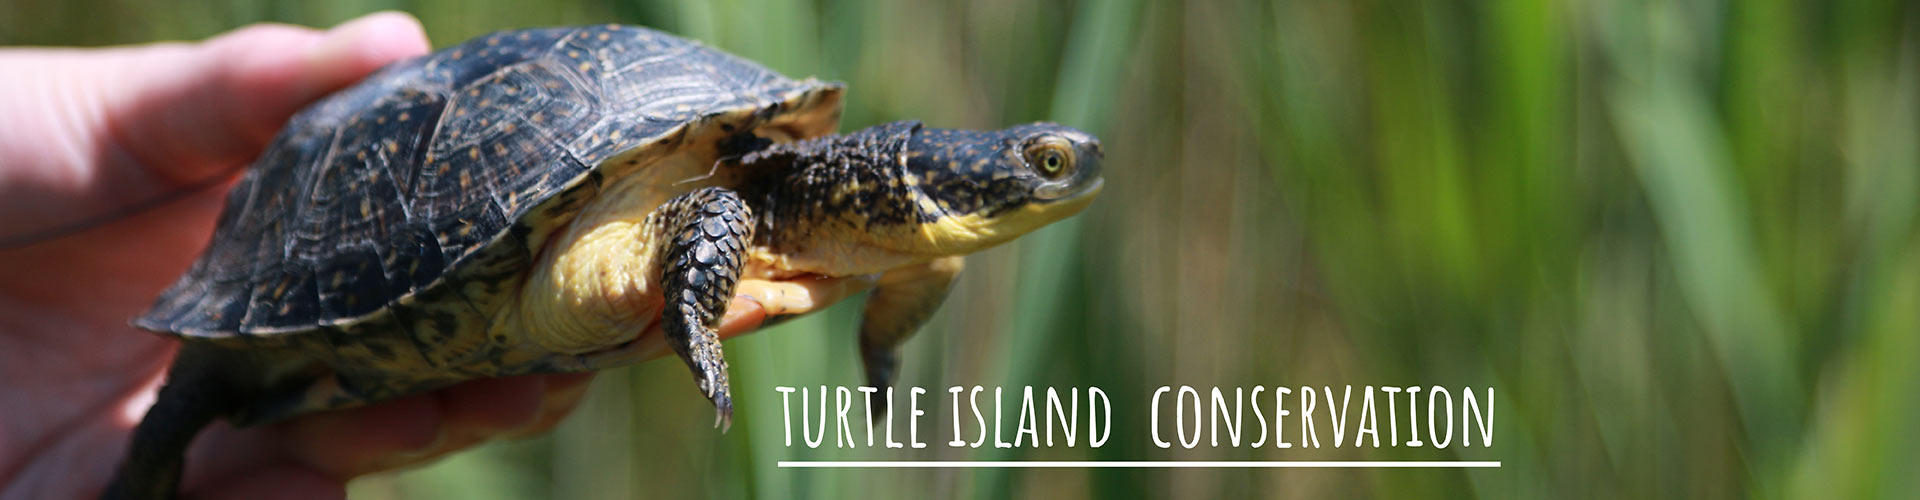 Turtle Island Conservation